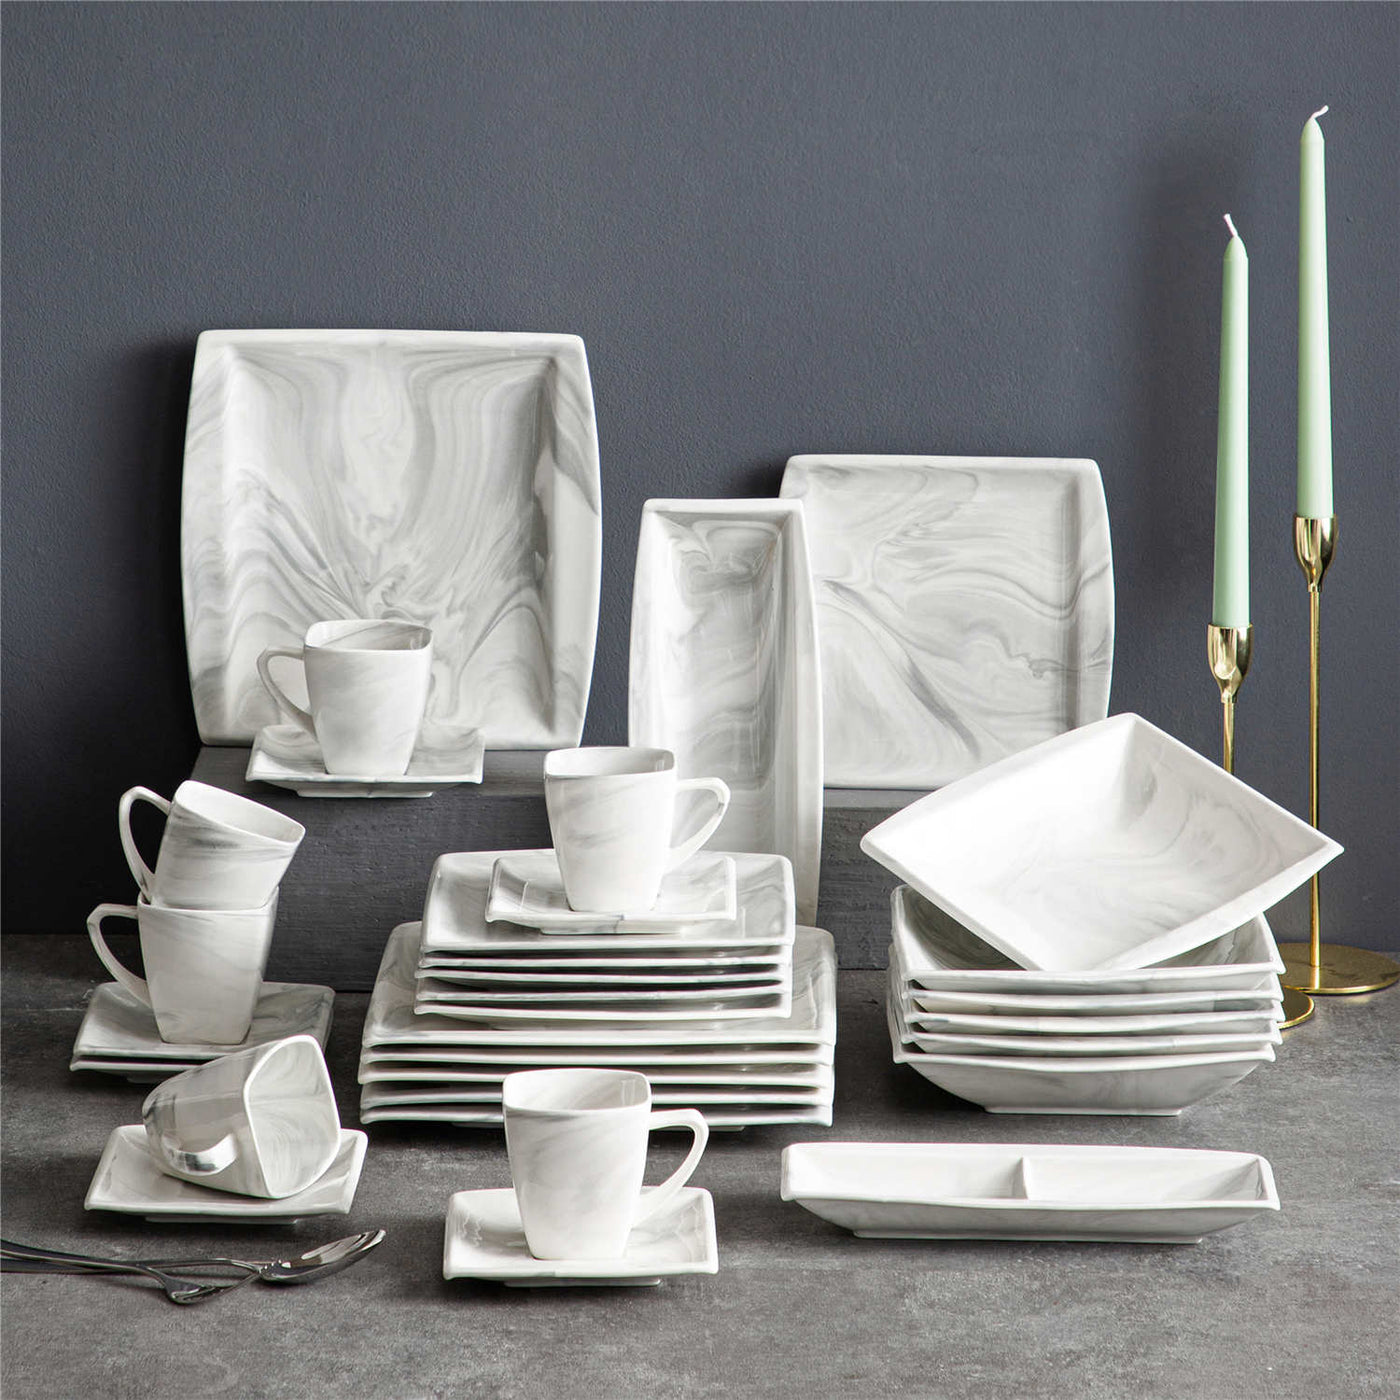 MALACASA Blance 30-Piece Marble Grey Porcelain Tableware